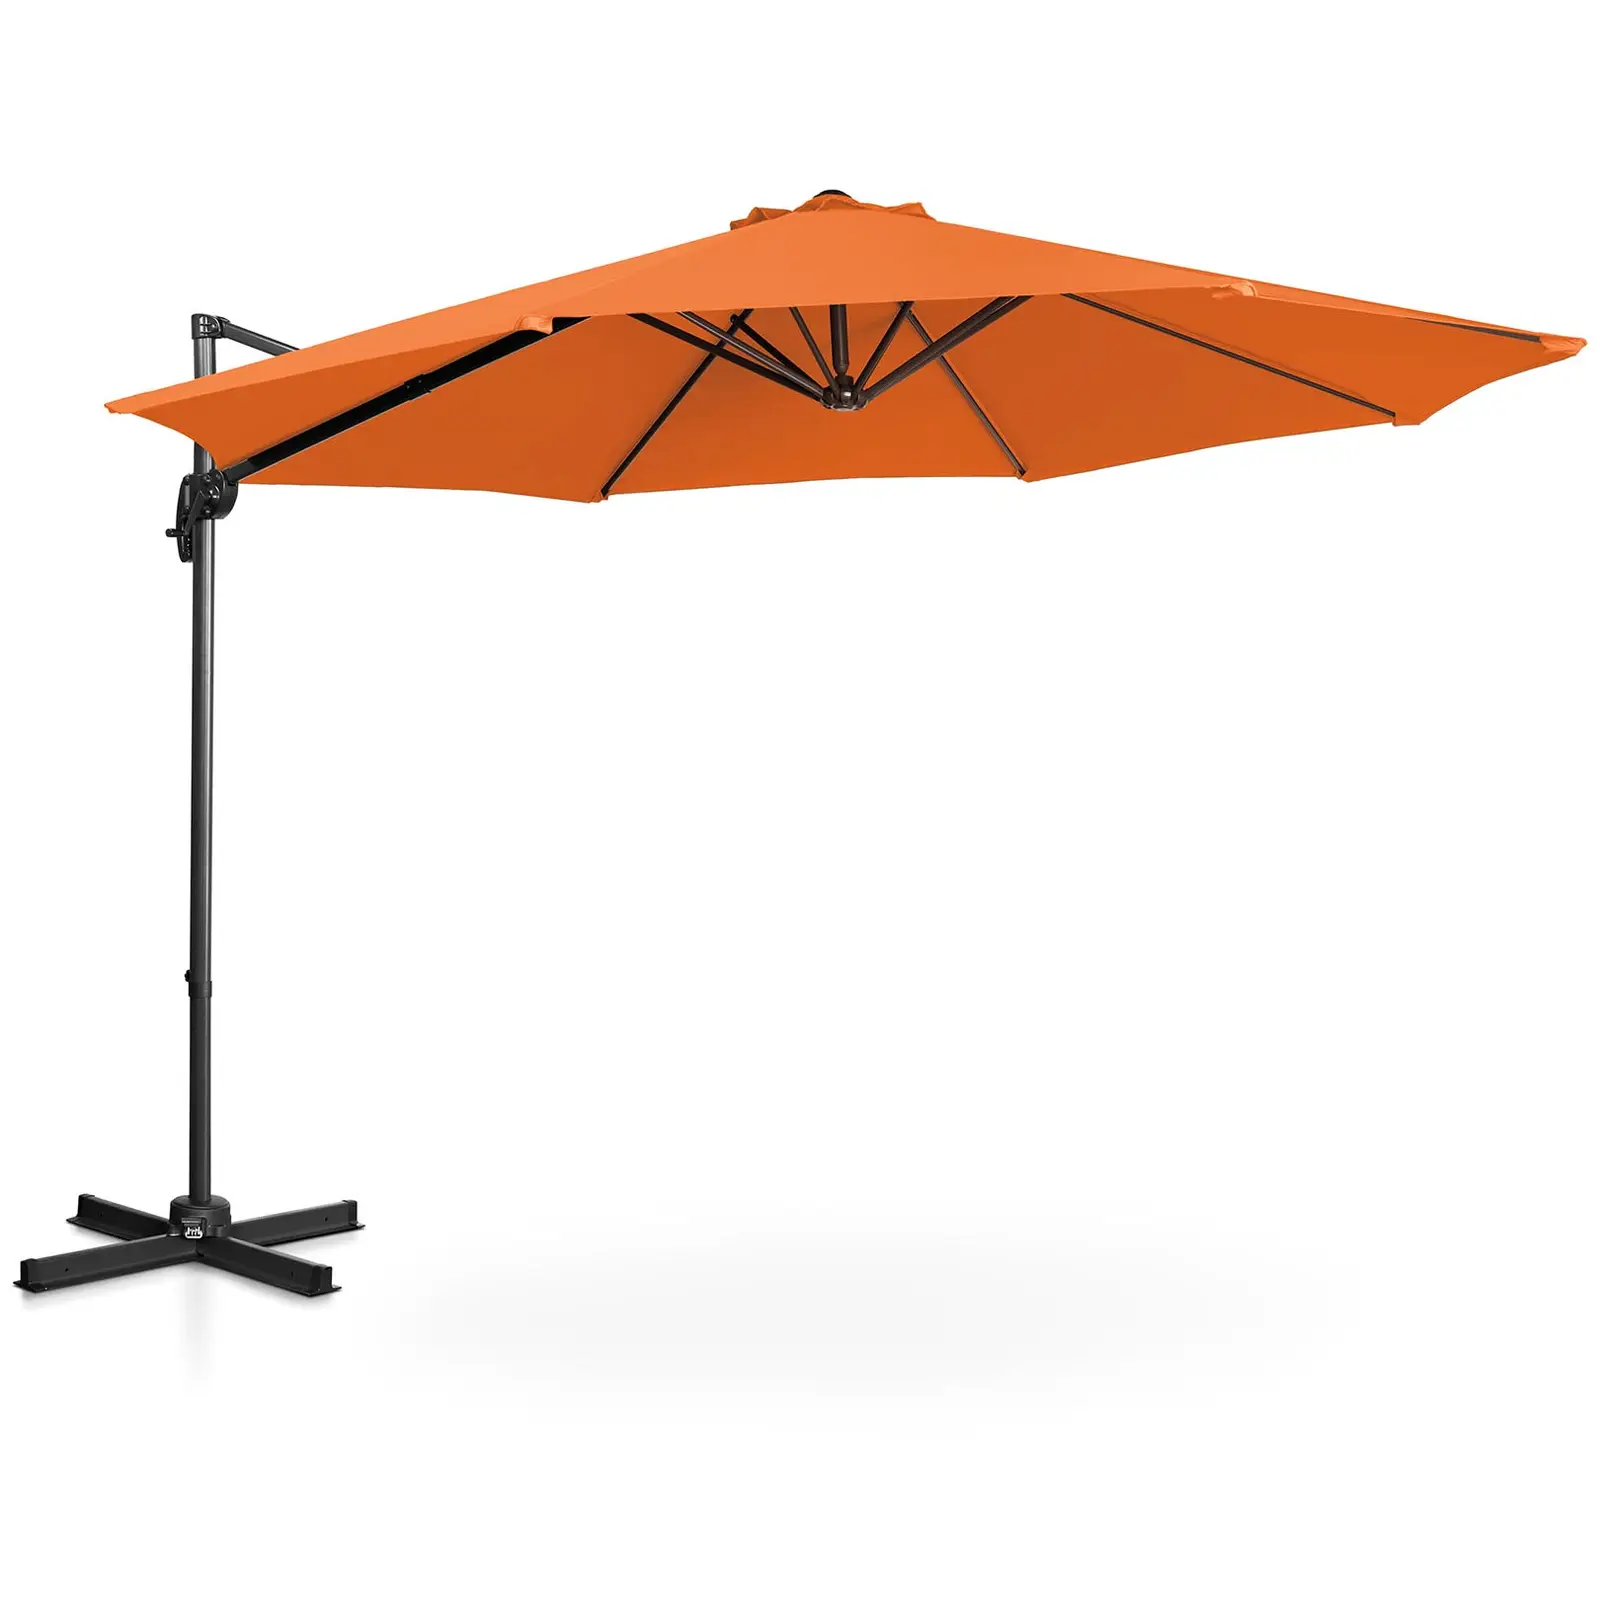 Sombrilla de semáforo - naranja - redonda - Ø 300 cm - inclinable y giratoria